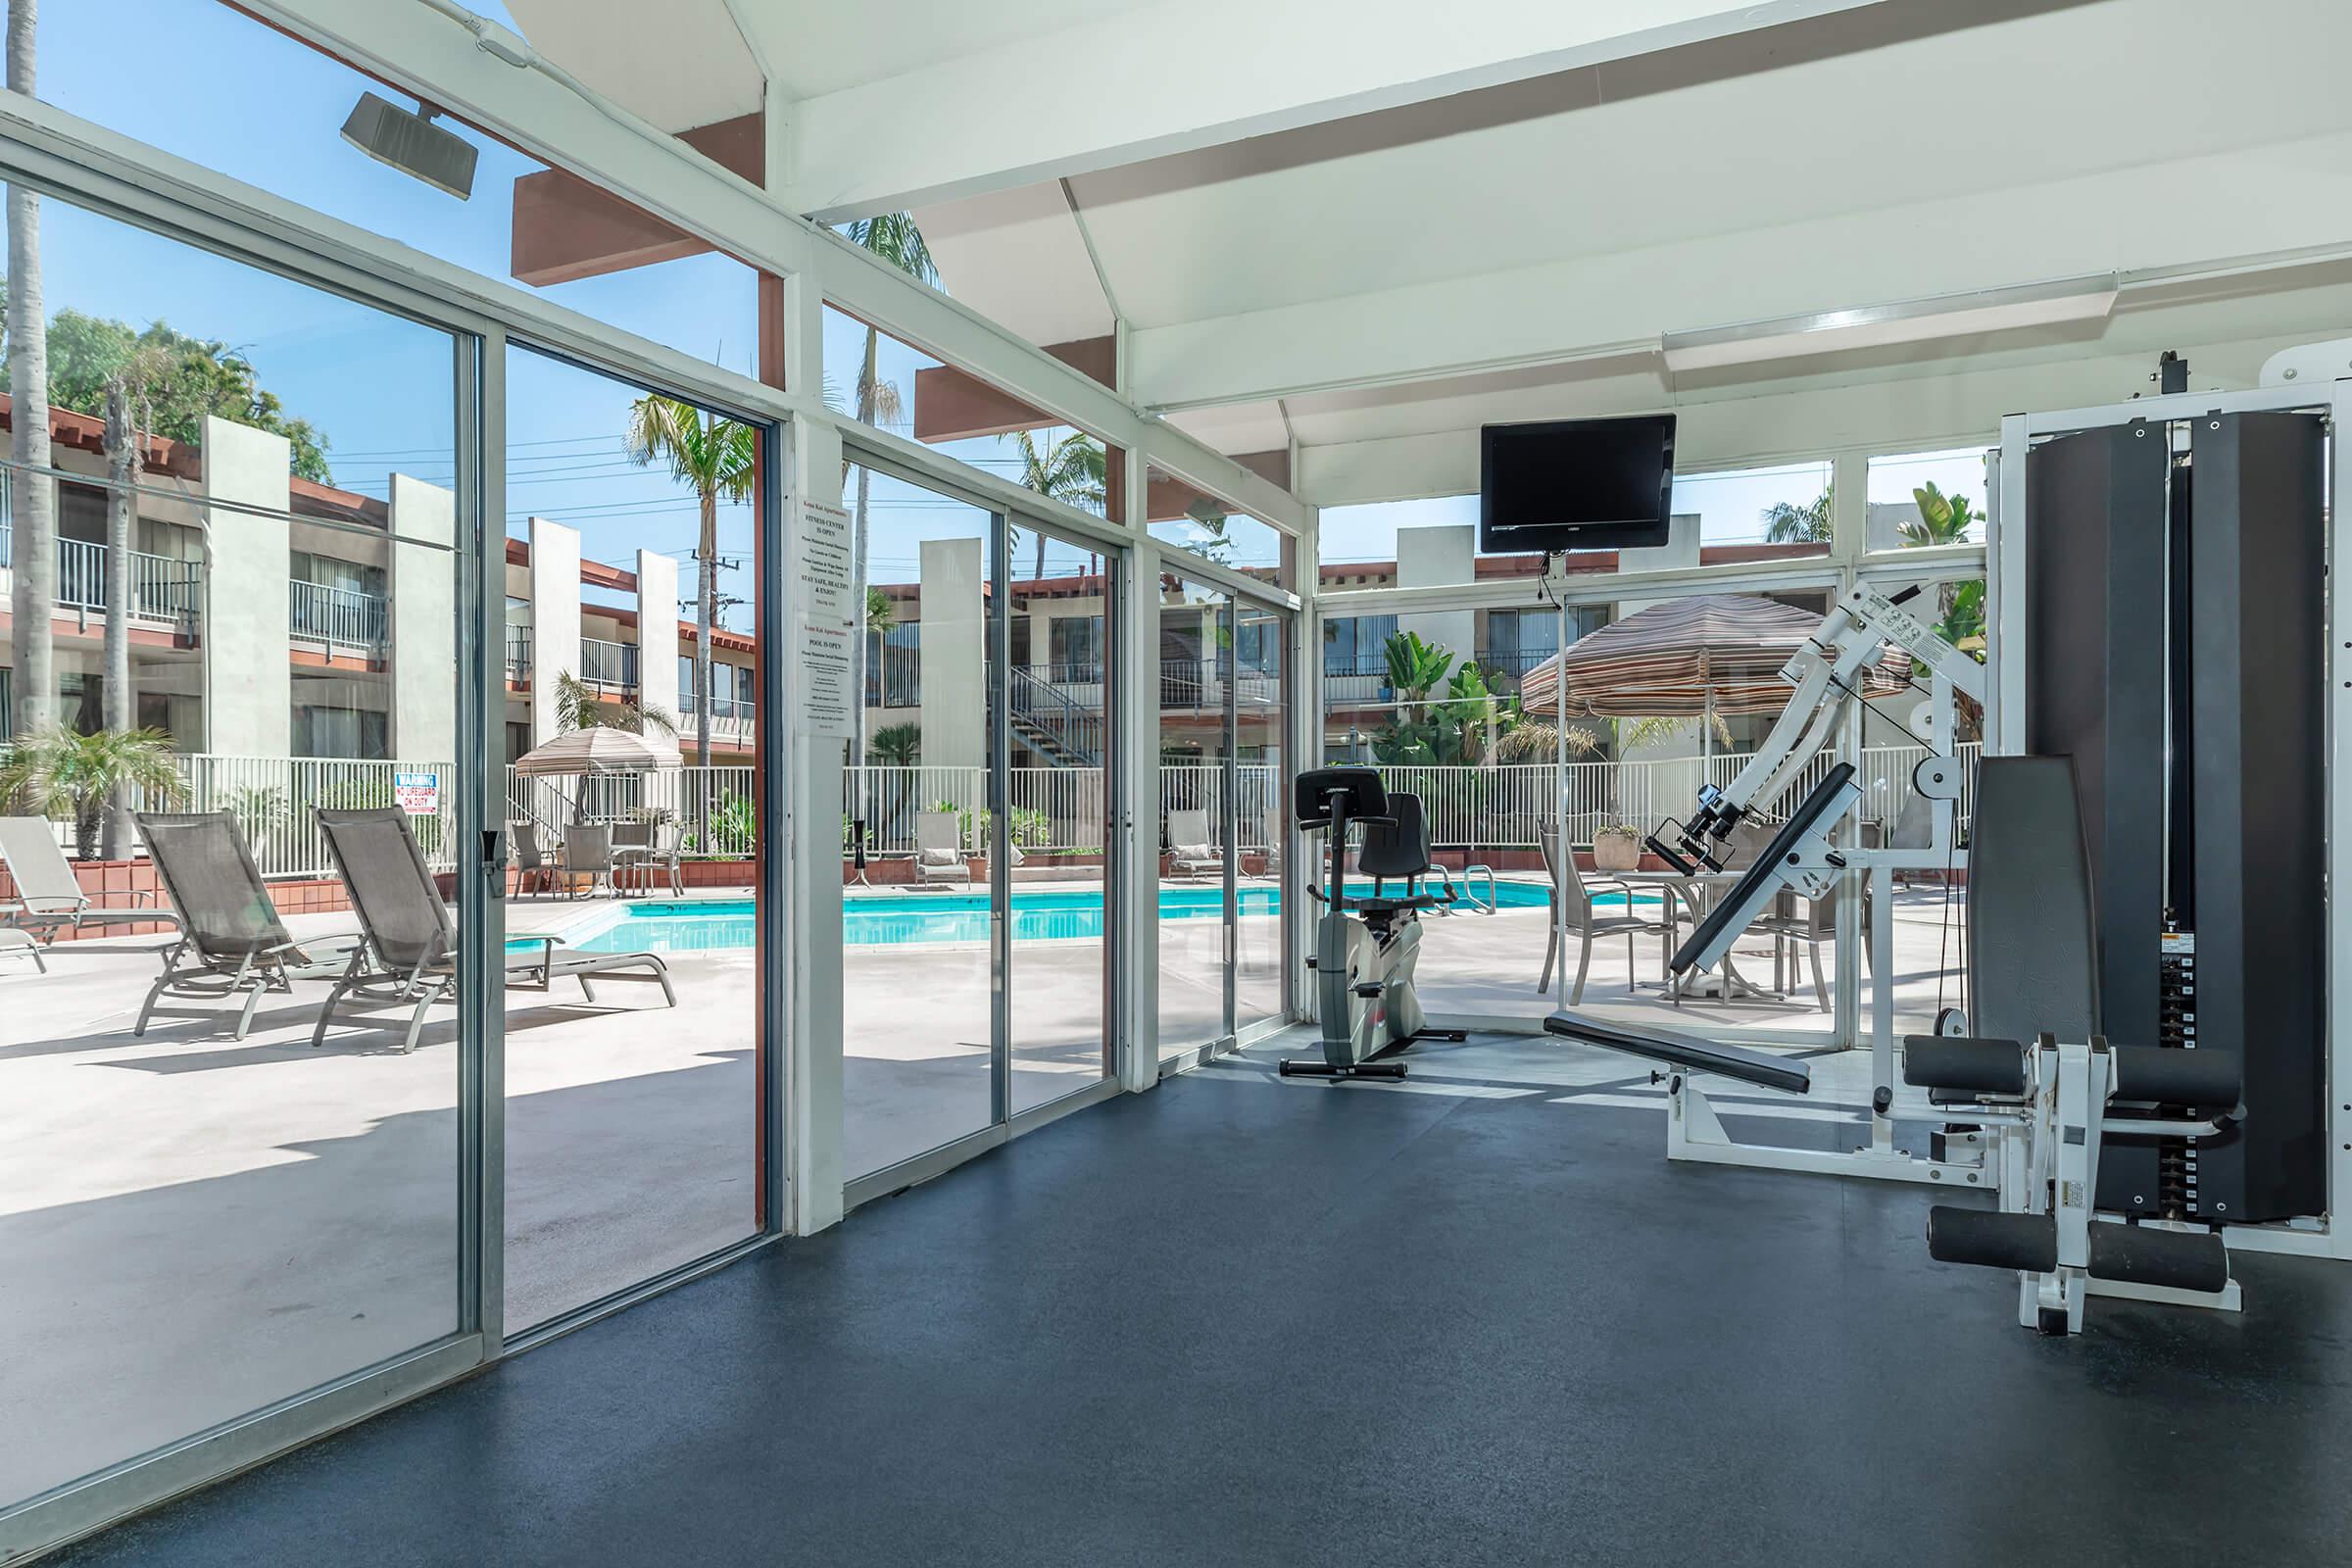 Kona Kai Apartments community gym with glass windows to the community pool